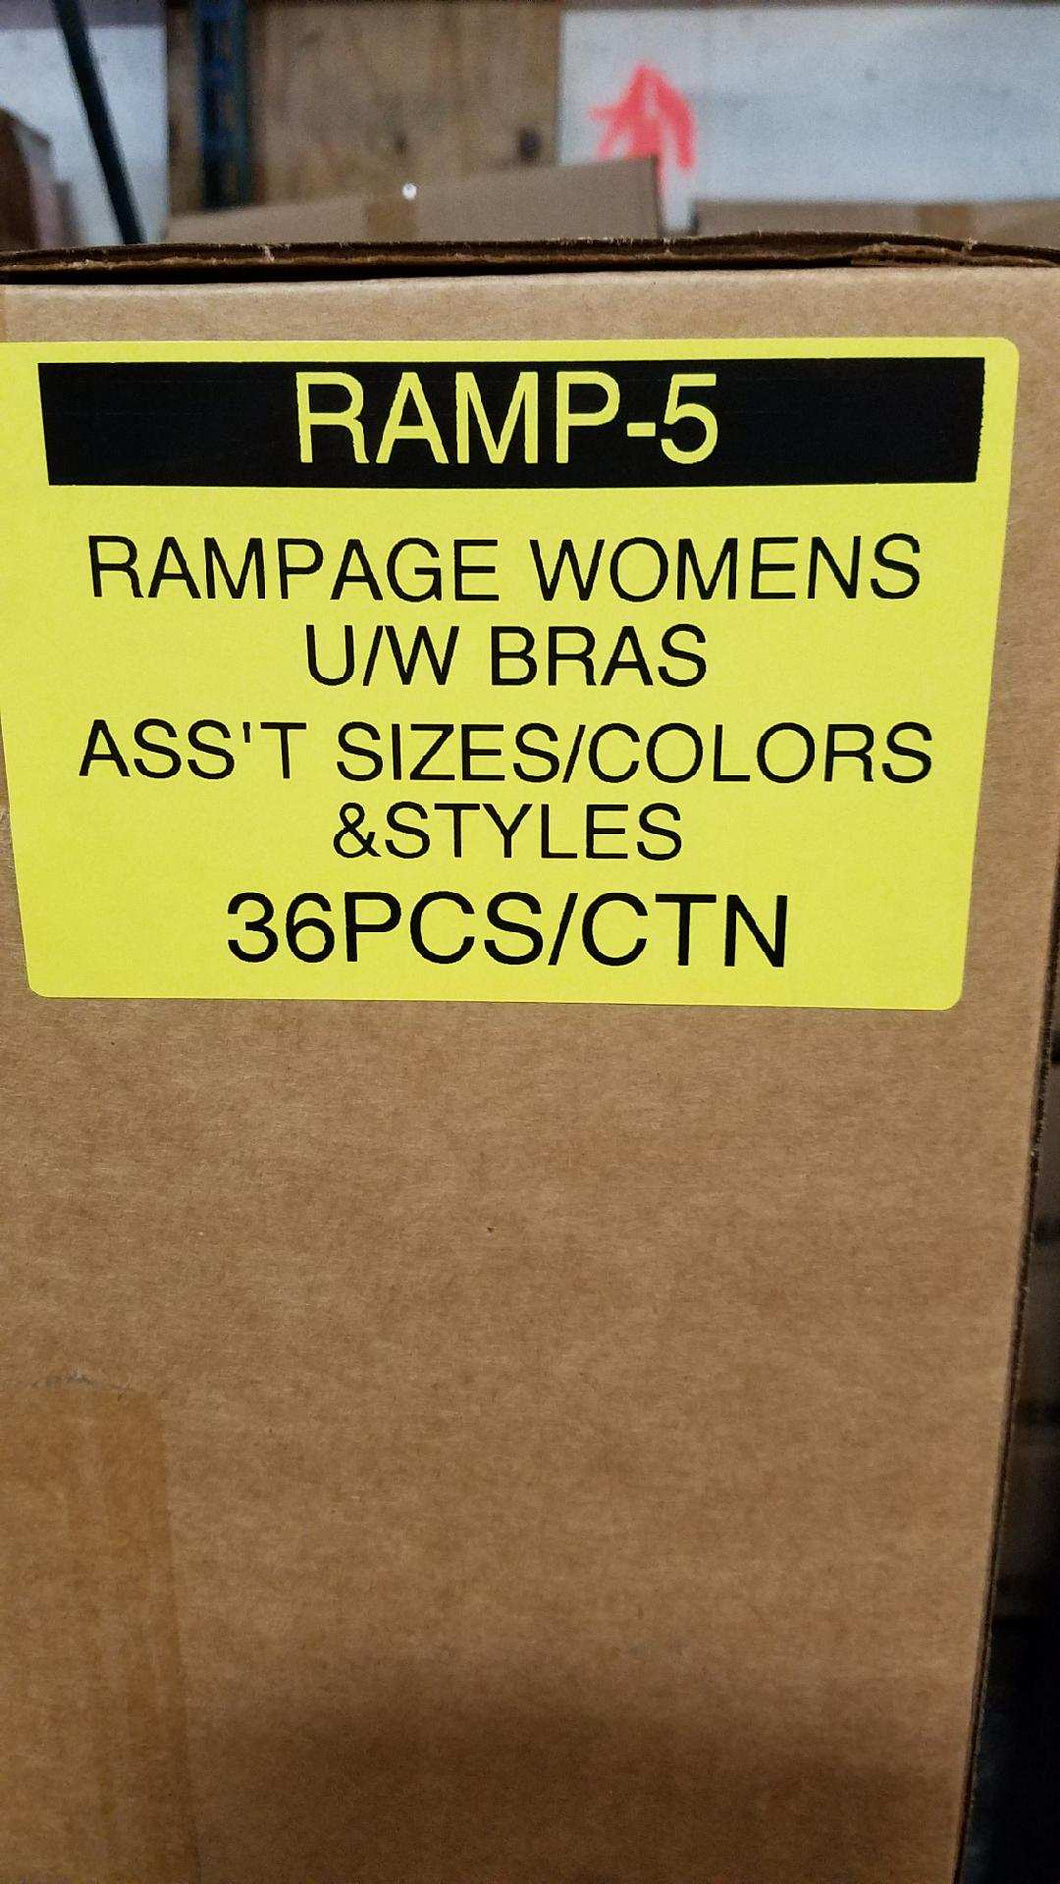 RAMPAGE WOMENS U/W BRAS Style RAMP-5